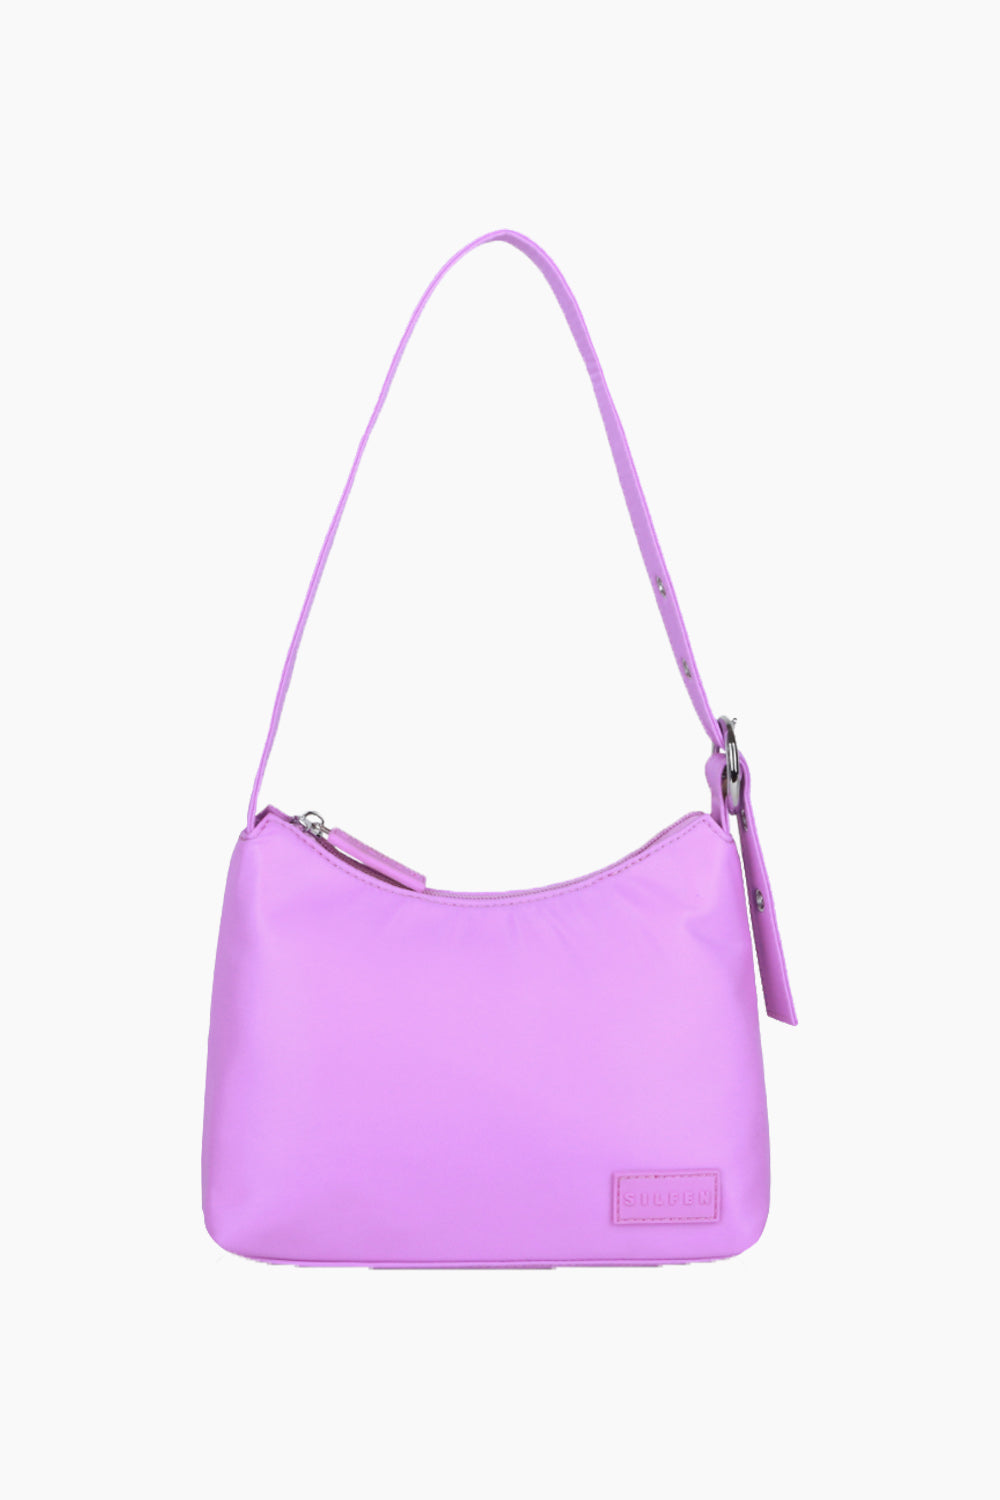 Handbag RECYCLE - Light Purple - Daniel Silfen - One Size 398.00 DKK - Boutiquenoir Fashion